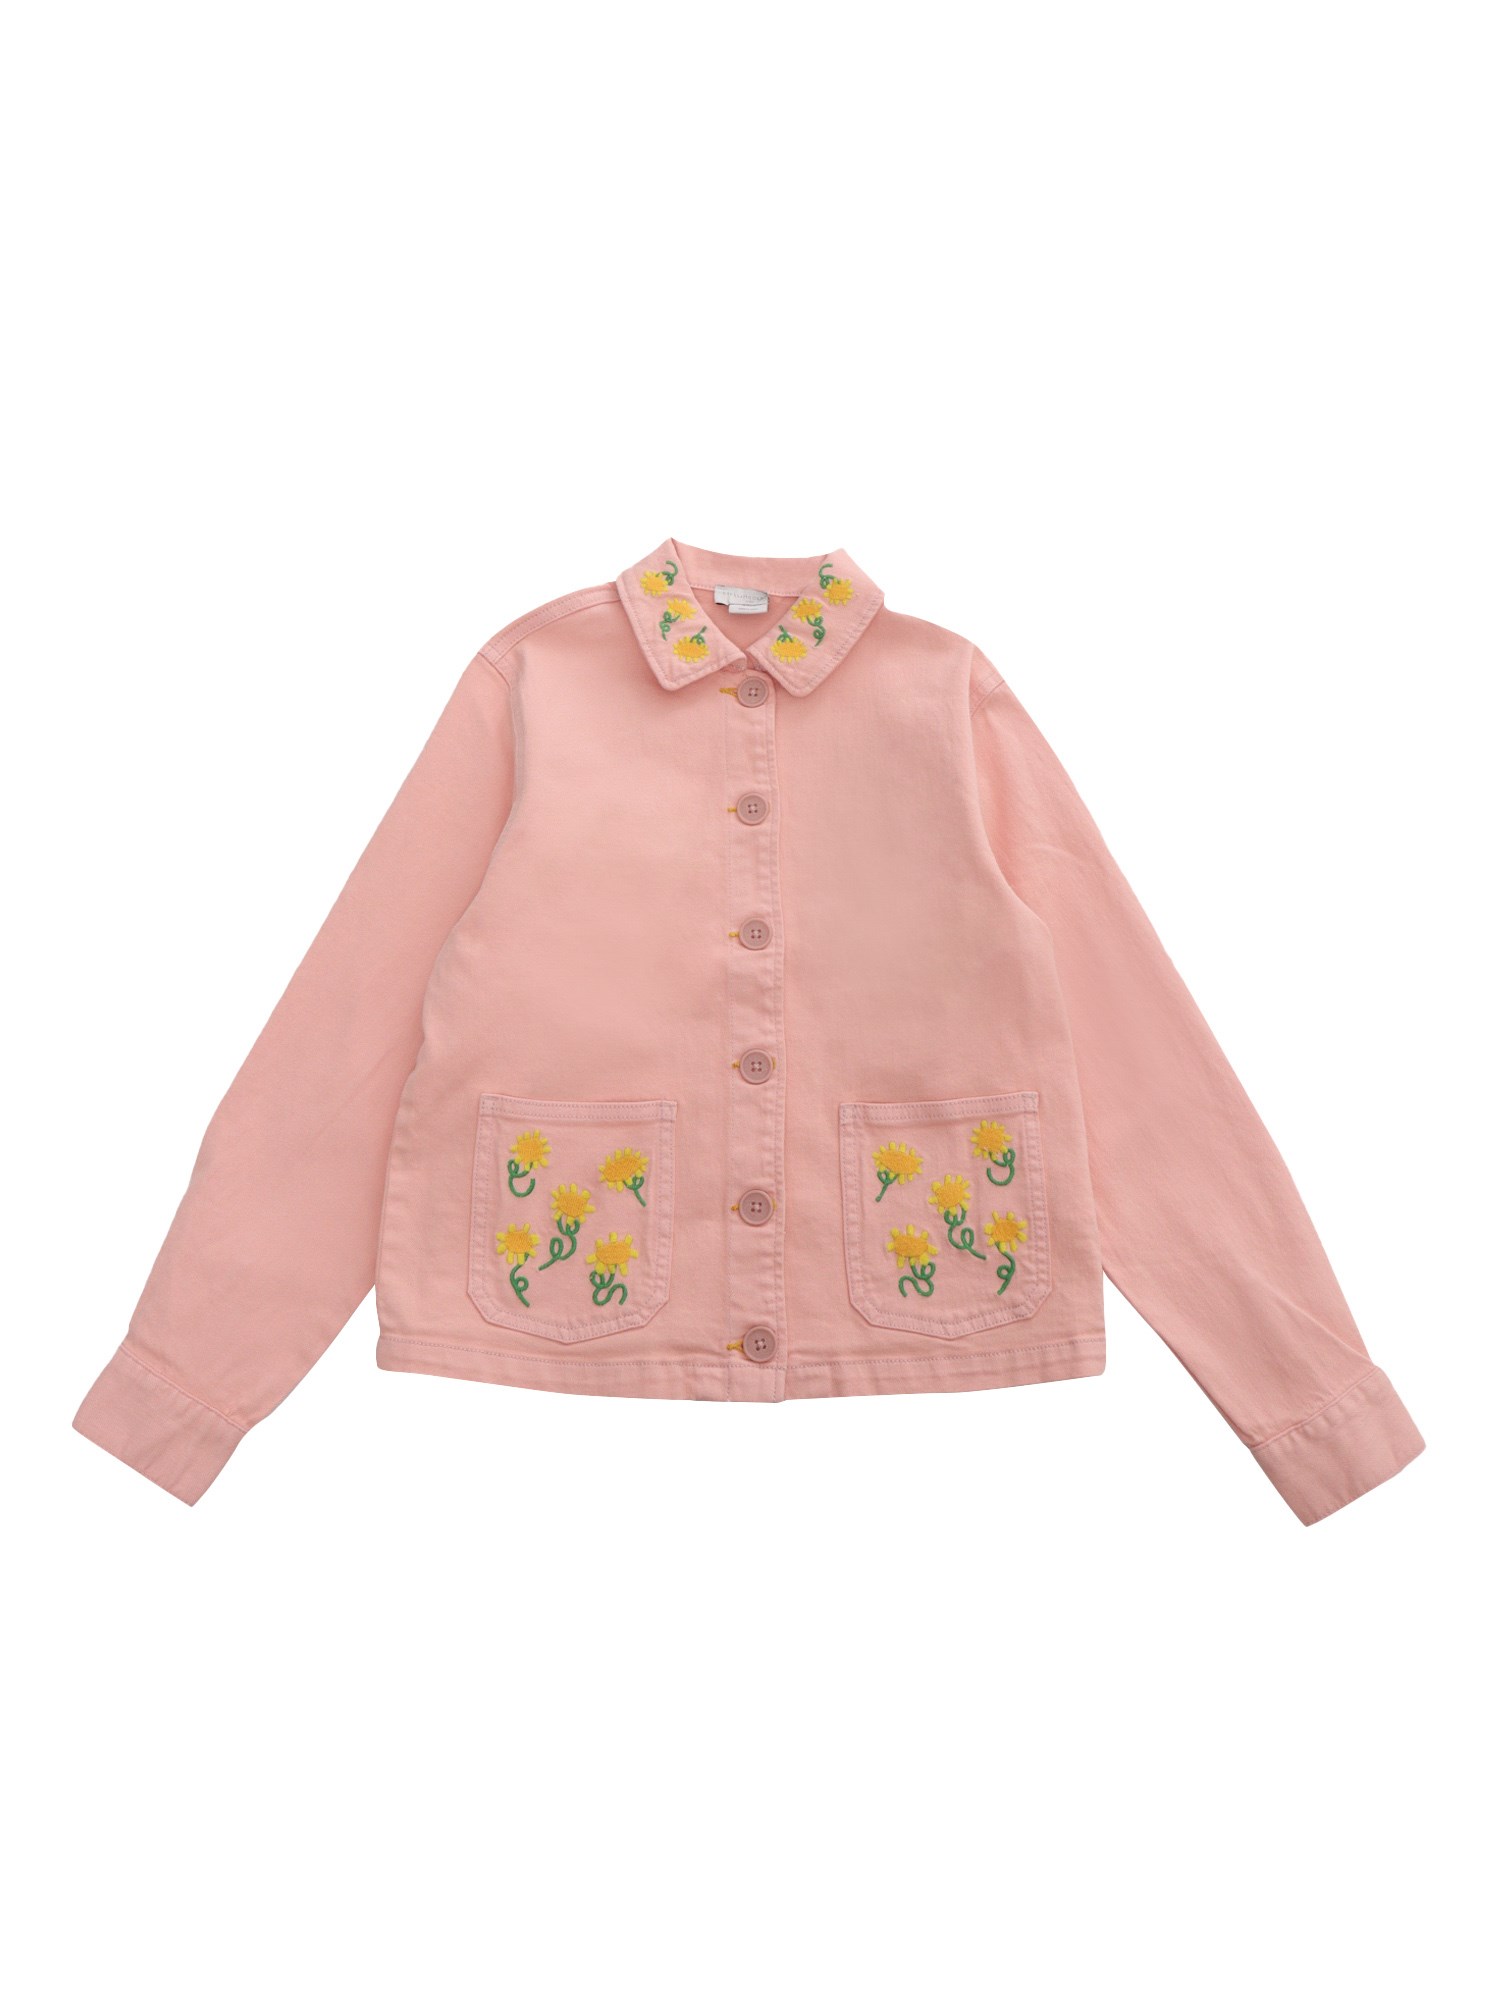 Stella Mccartney Pink Denim Jacket With Flowers